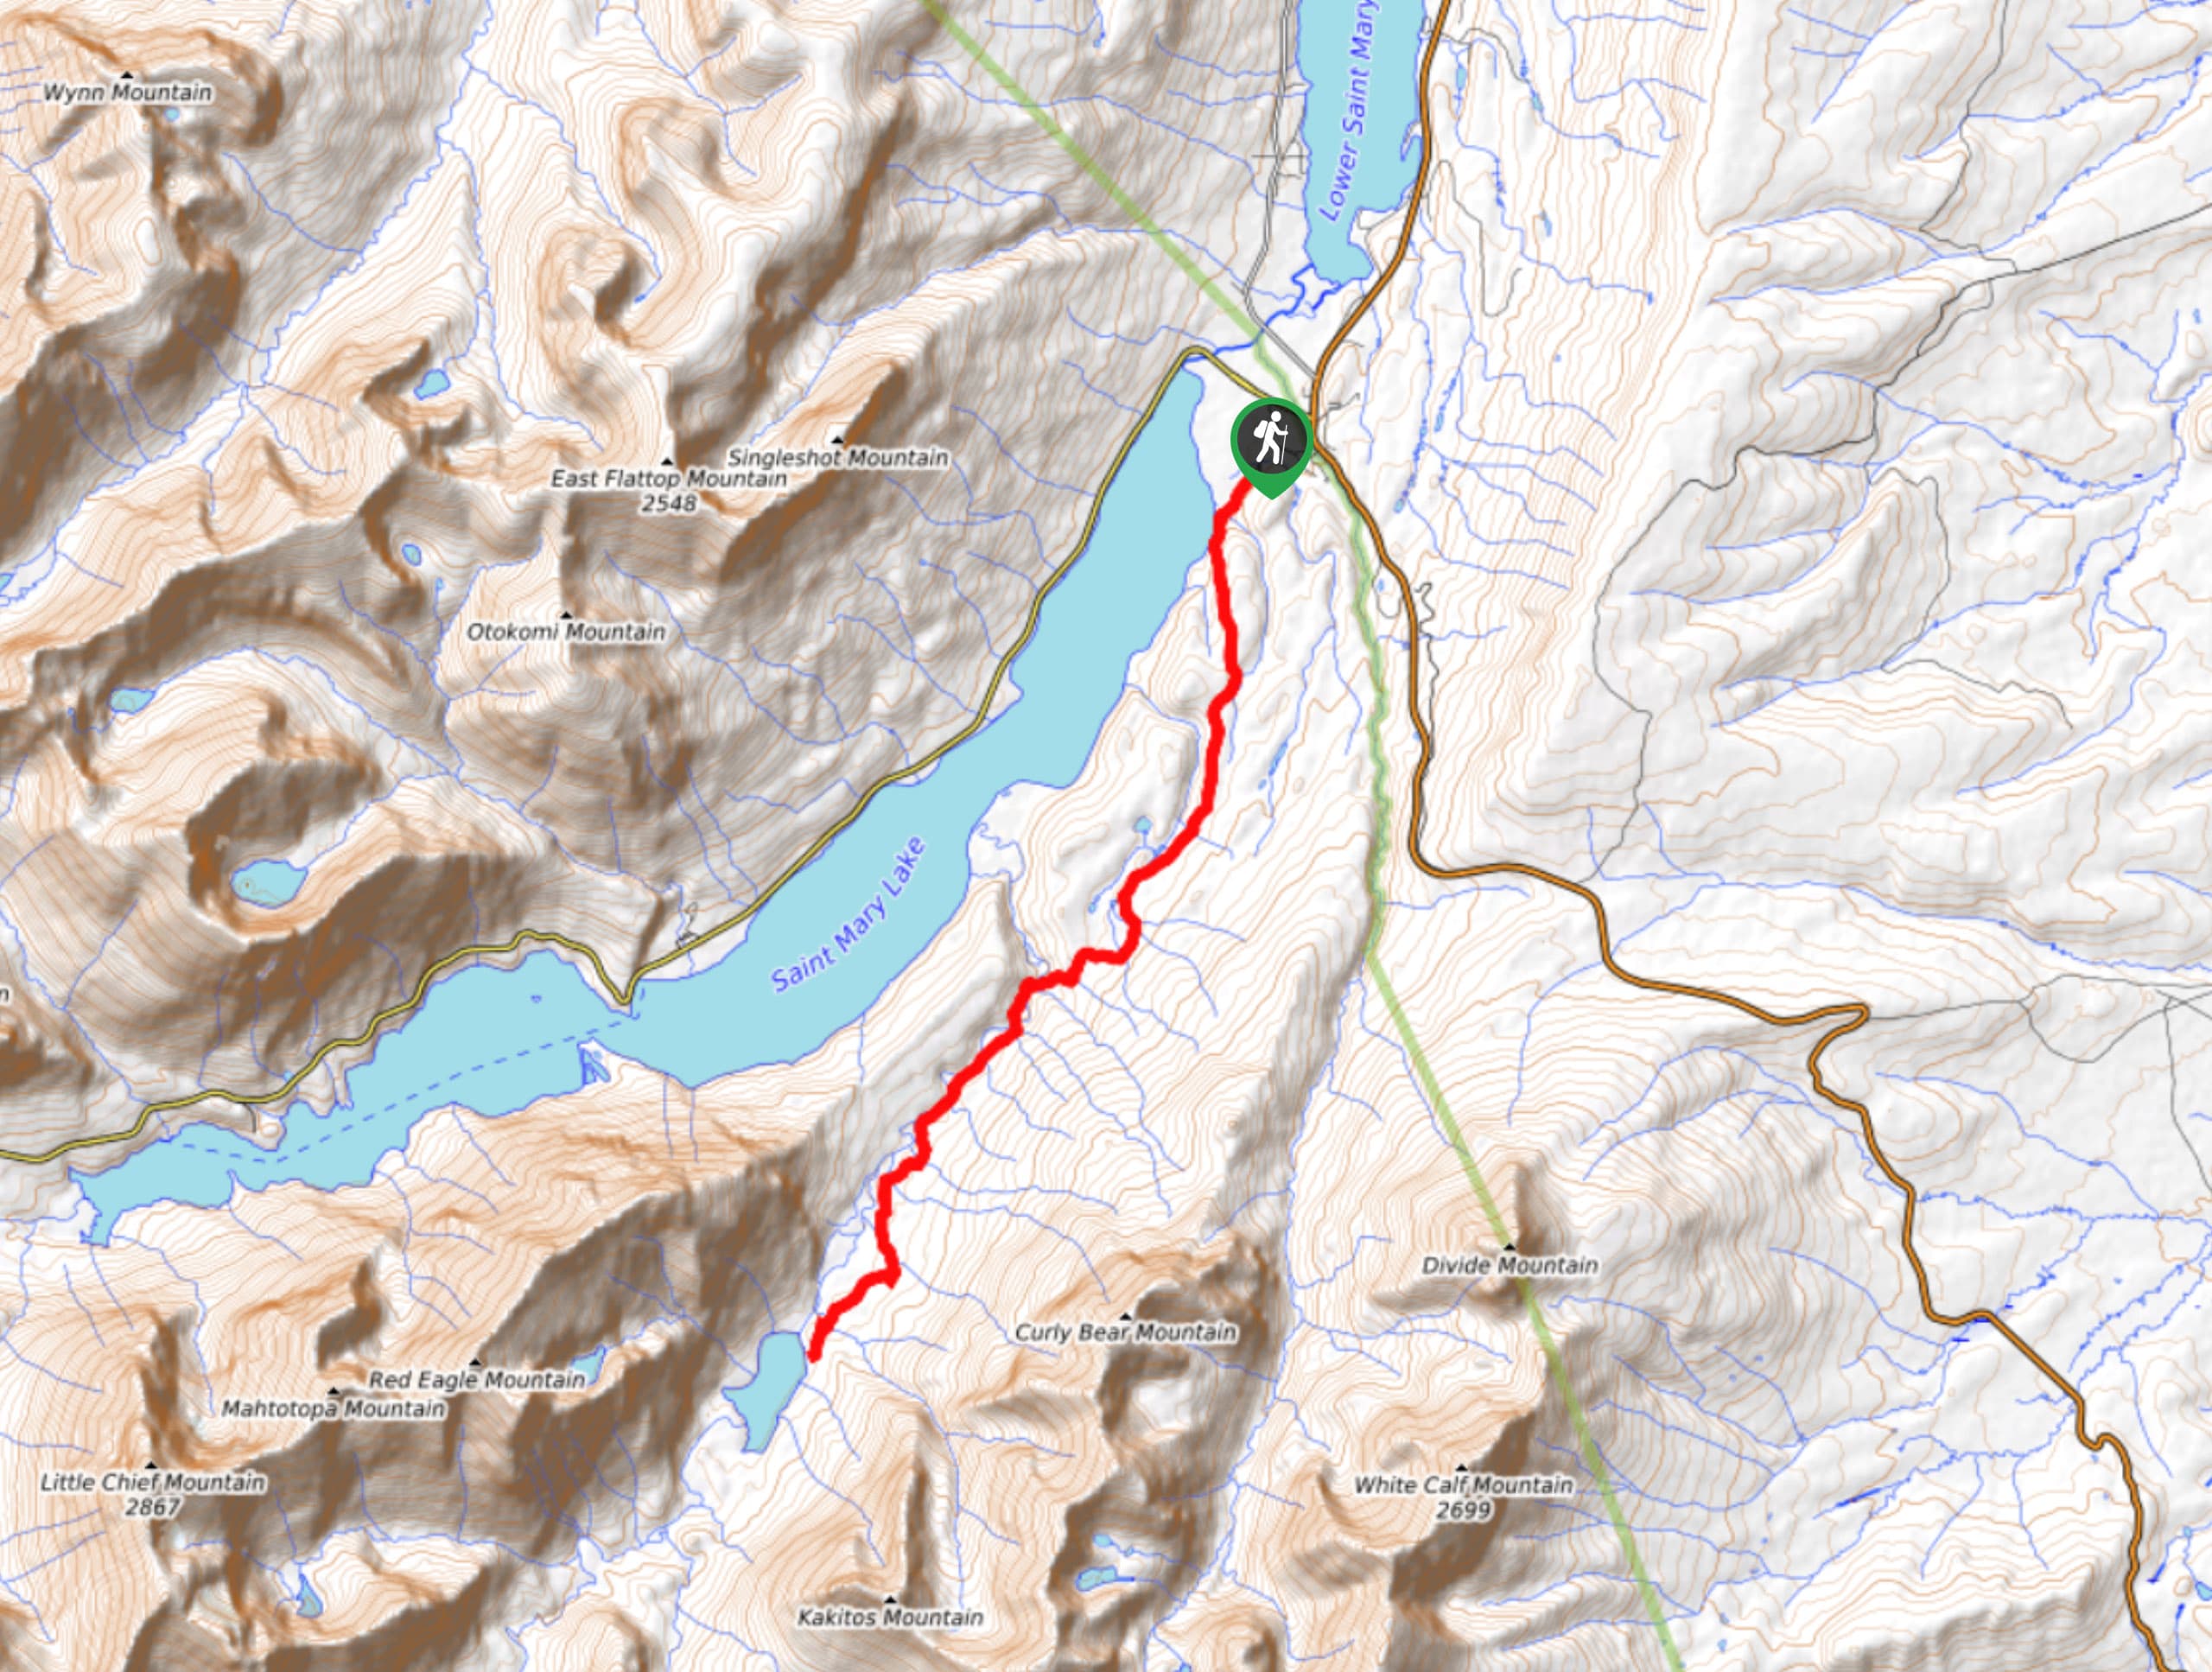 Red Eagle Lake Trail Map